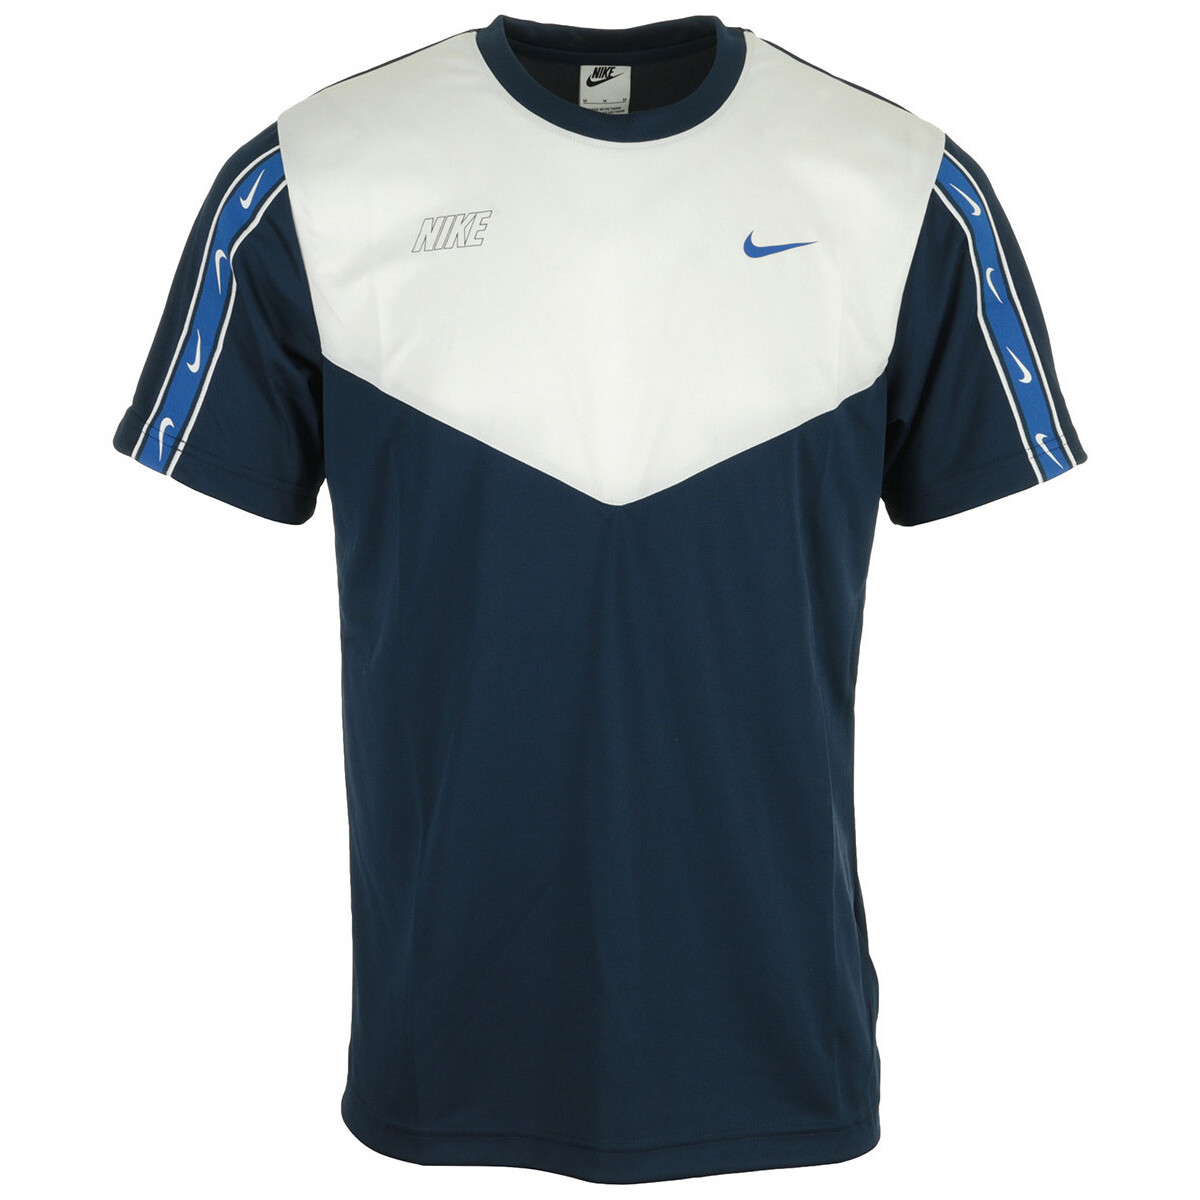 Textil Muži Trička s krátkým rukávem Nike Nsw Repeat Swoosh Pk Tee Modrá